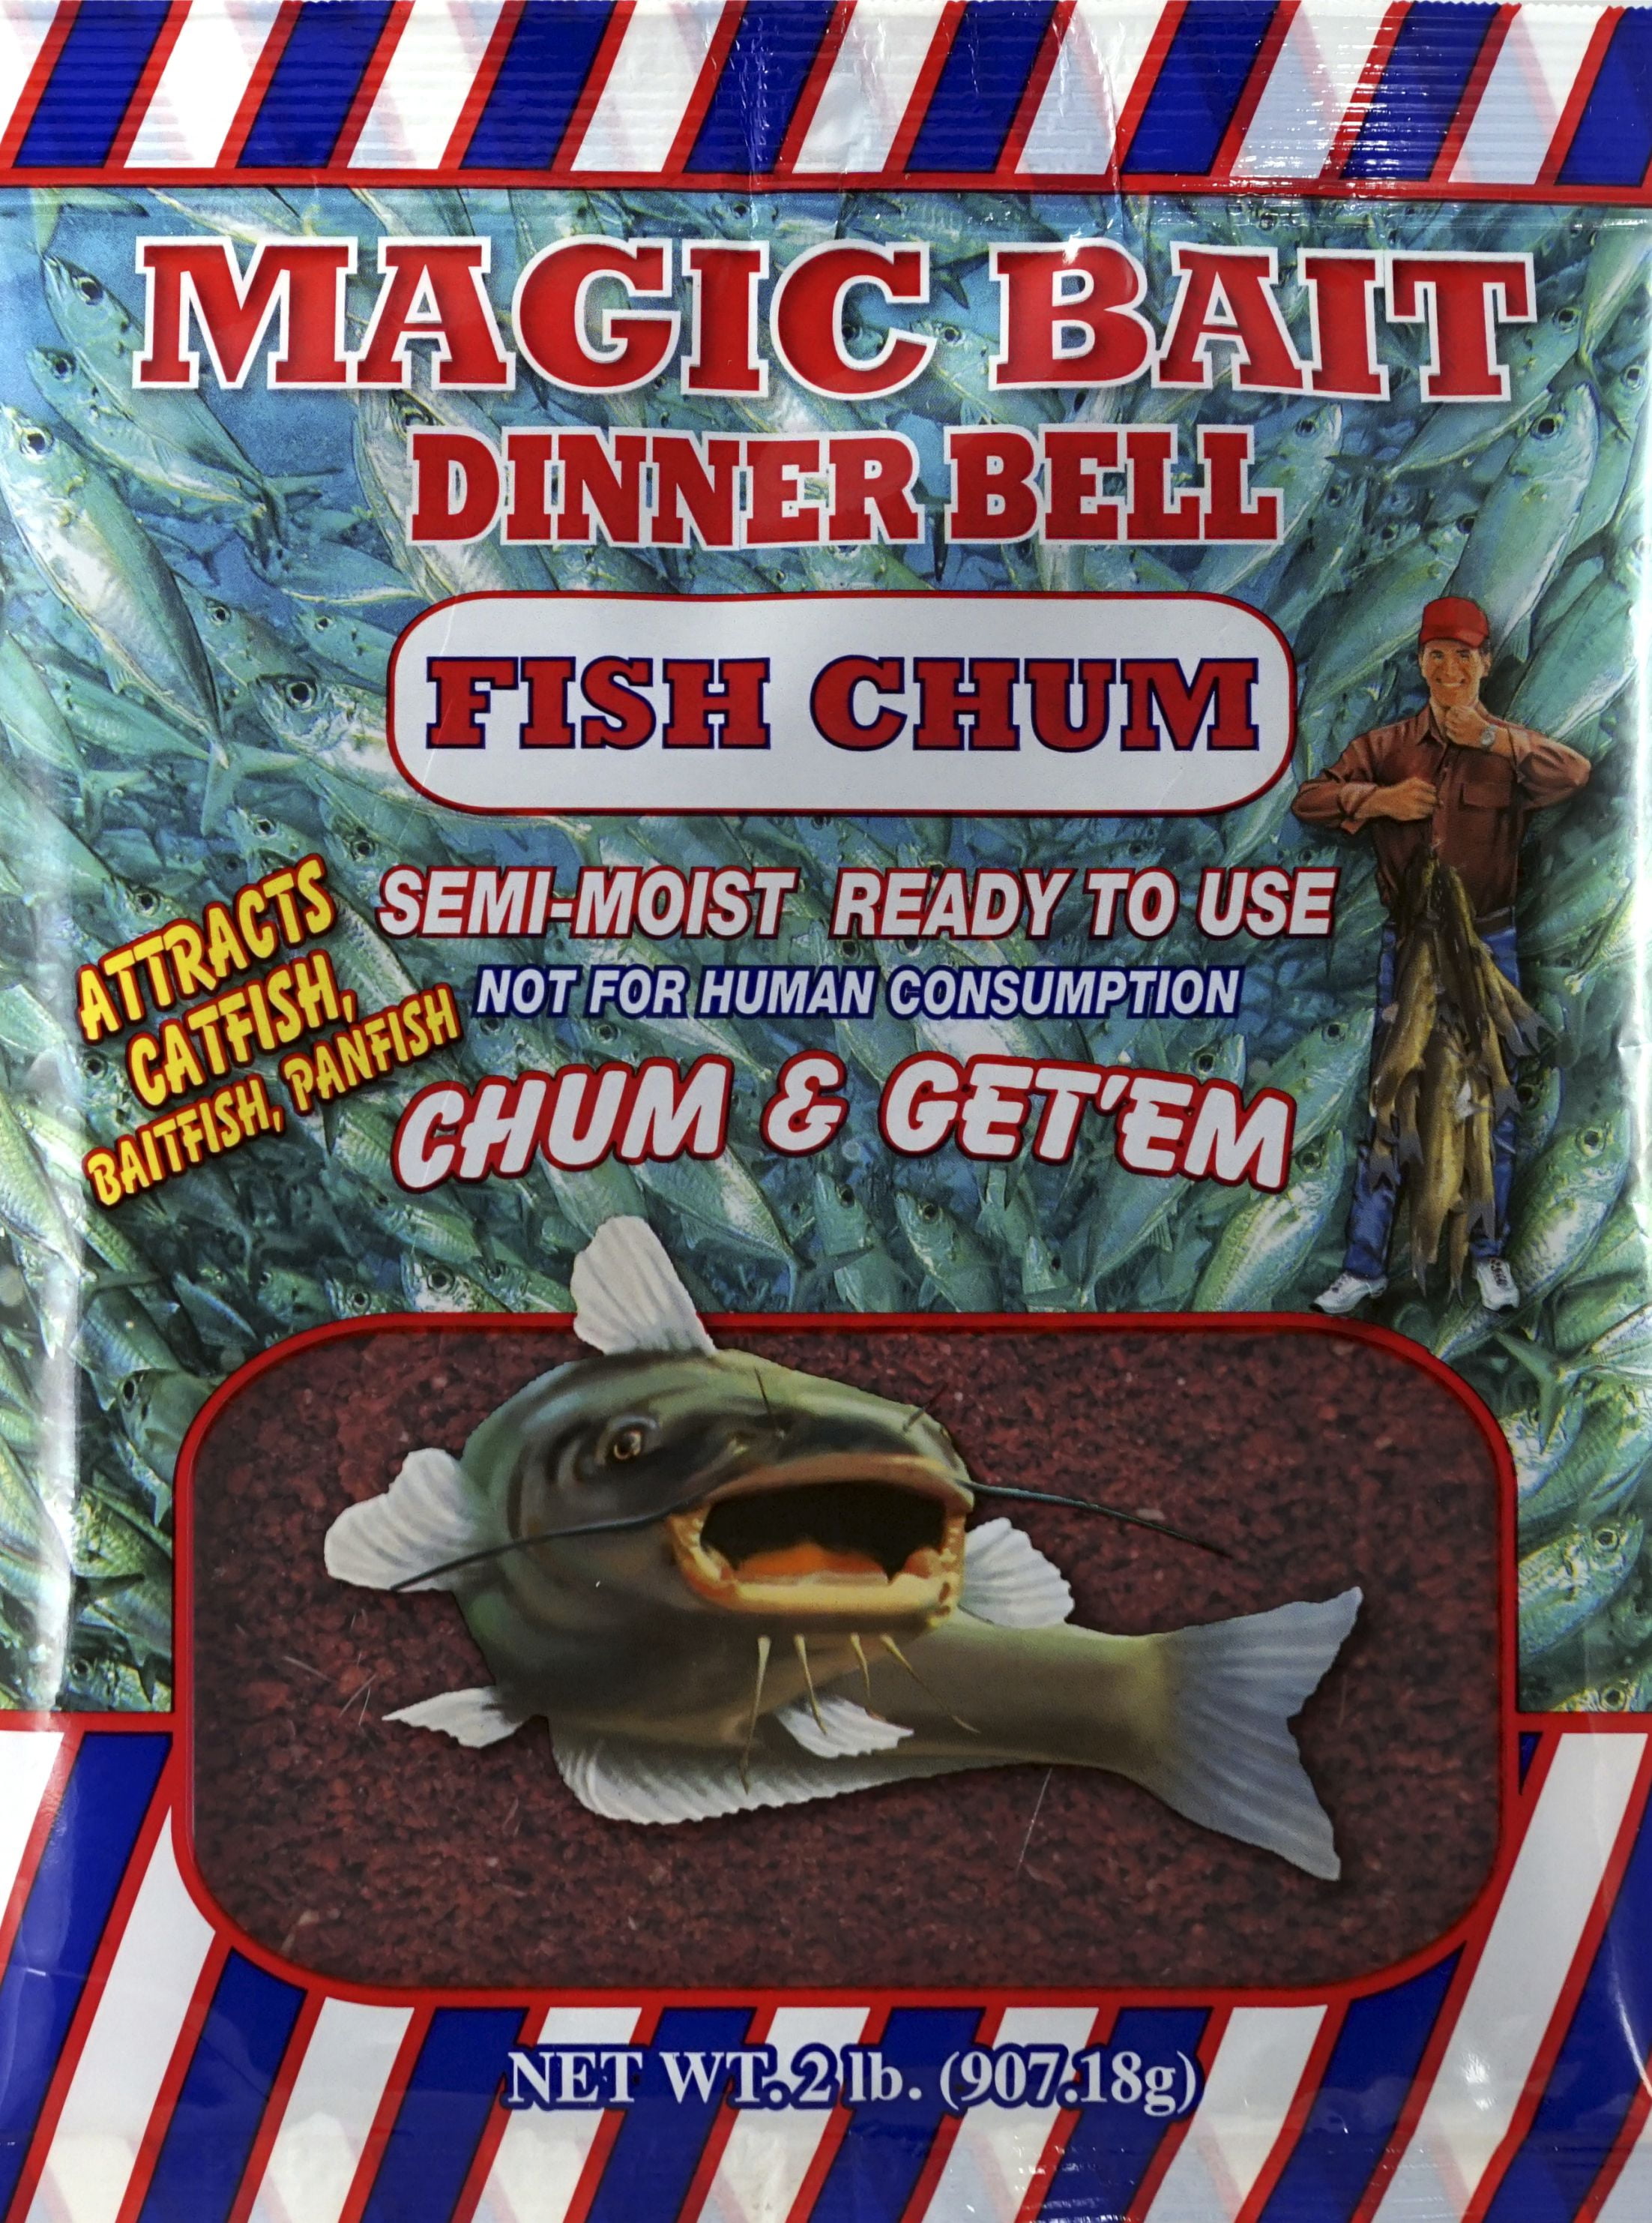 Magic Bait, Dinner Bell Fish Chum Attractant, 2lbs 